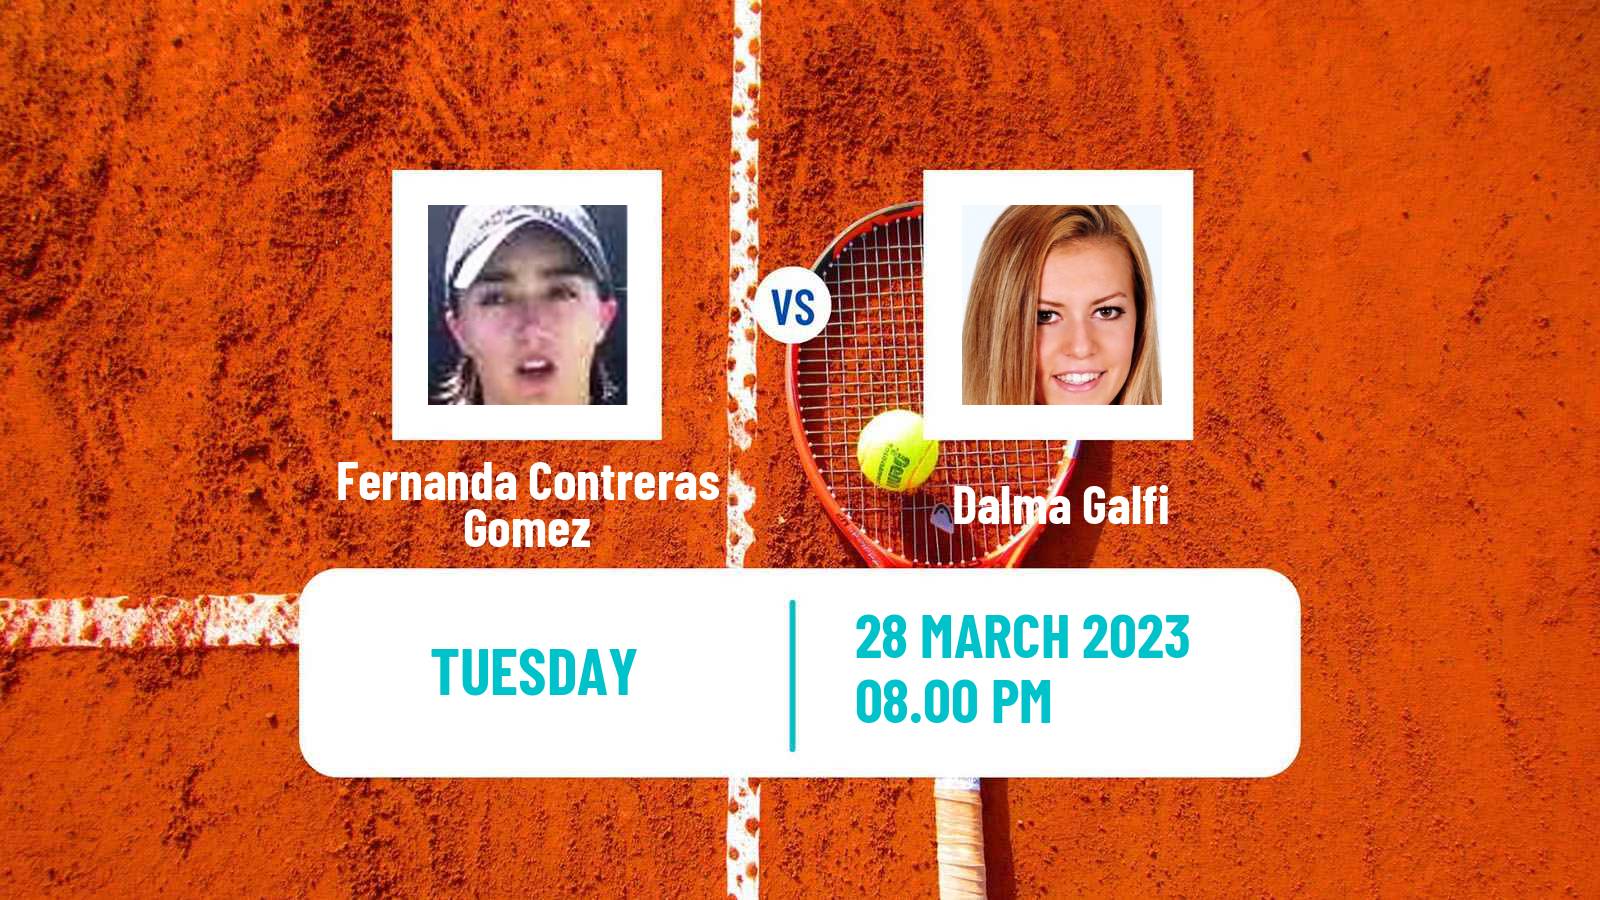 Tennis ATP Challenger Fernanda Contreras Gomez - Dalma Galfi